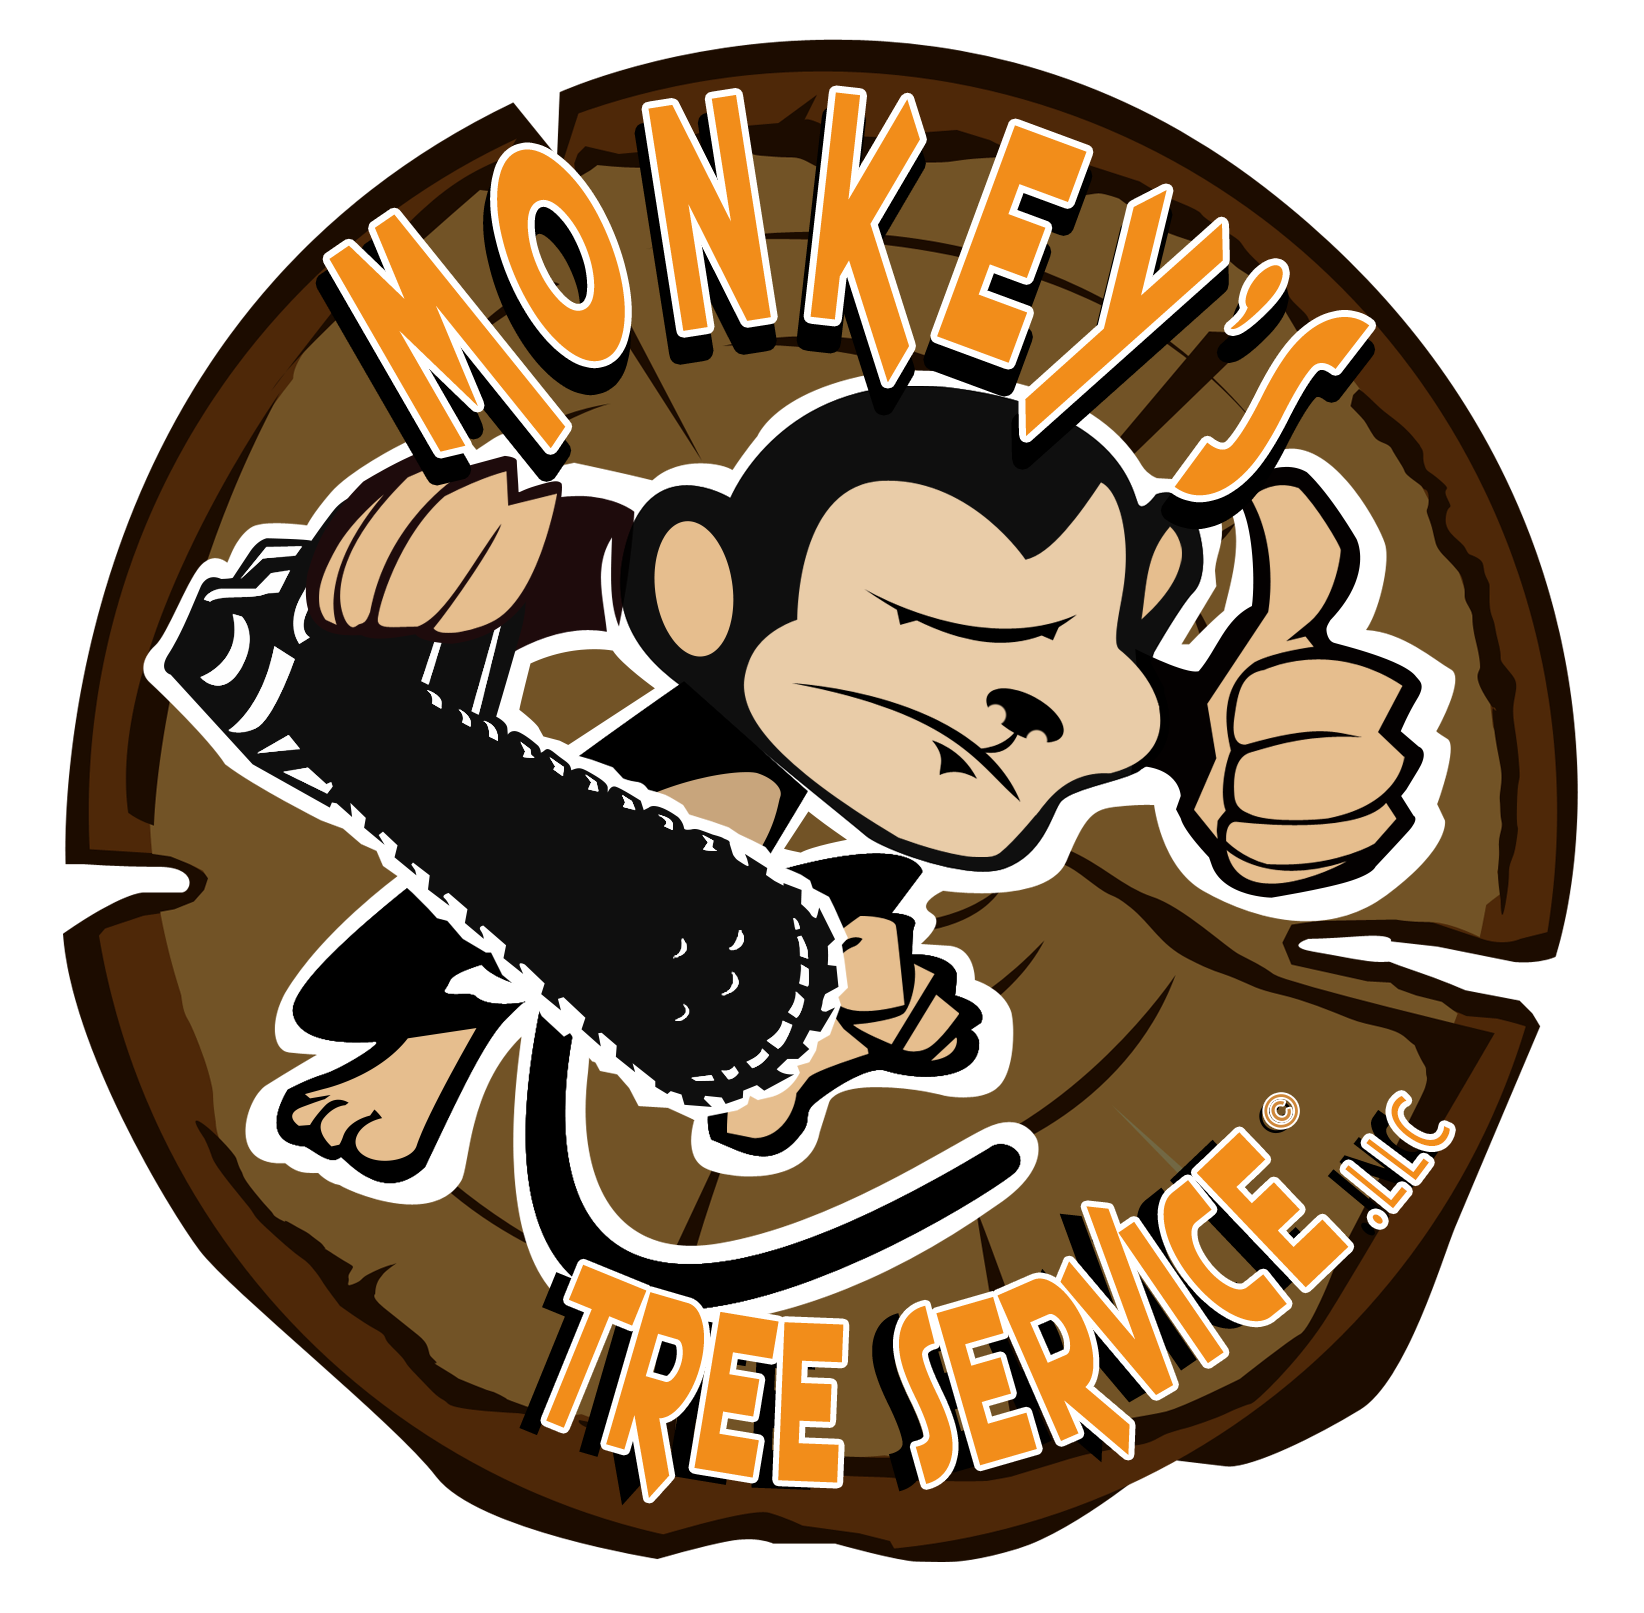 Monkeys Tree Service, LLC Logo